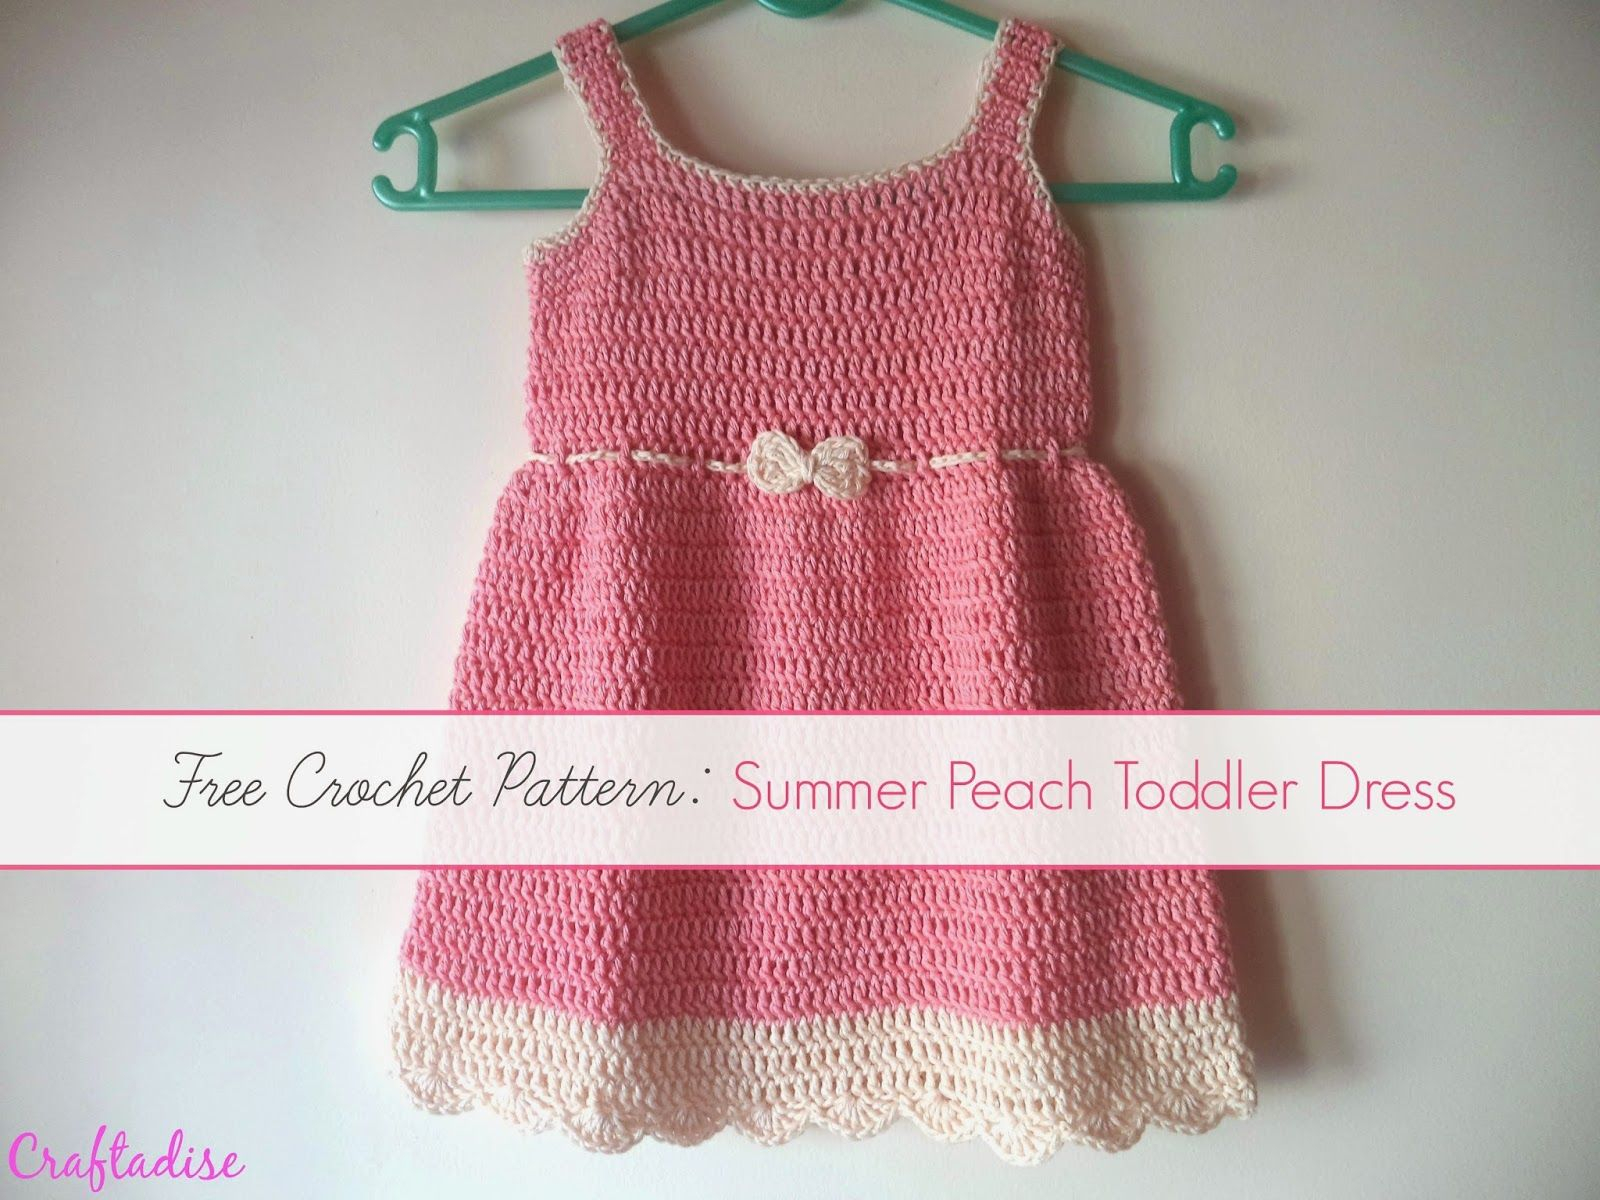 Crochet Toddler Dress Pattern Free Crochet Pattern Crochet Summer Peach Toddler Dress Crochet